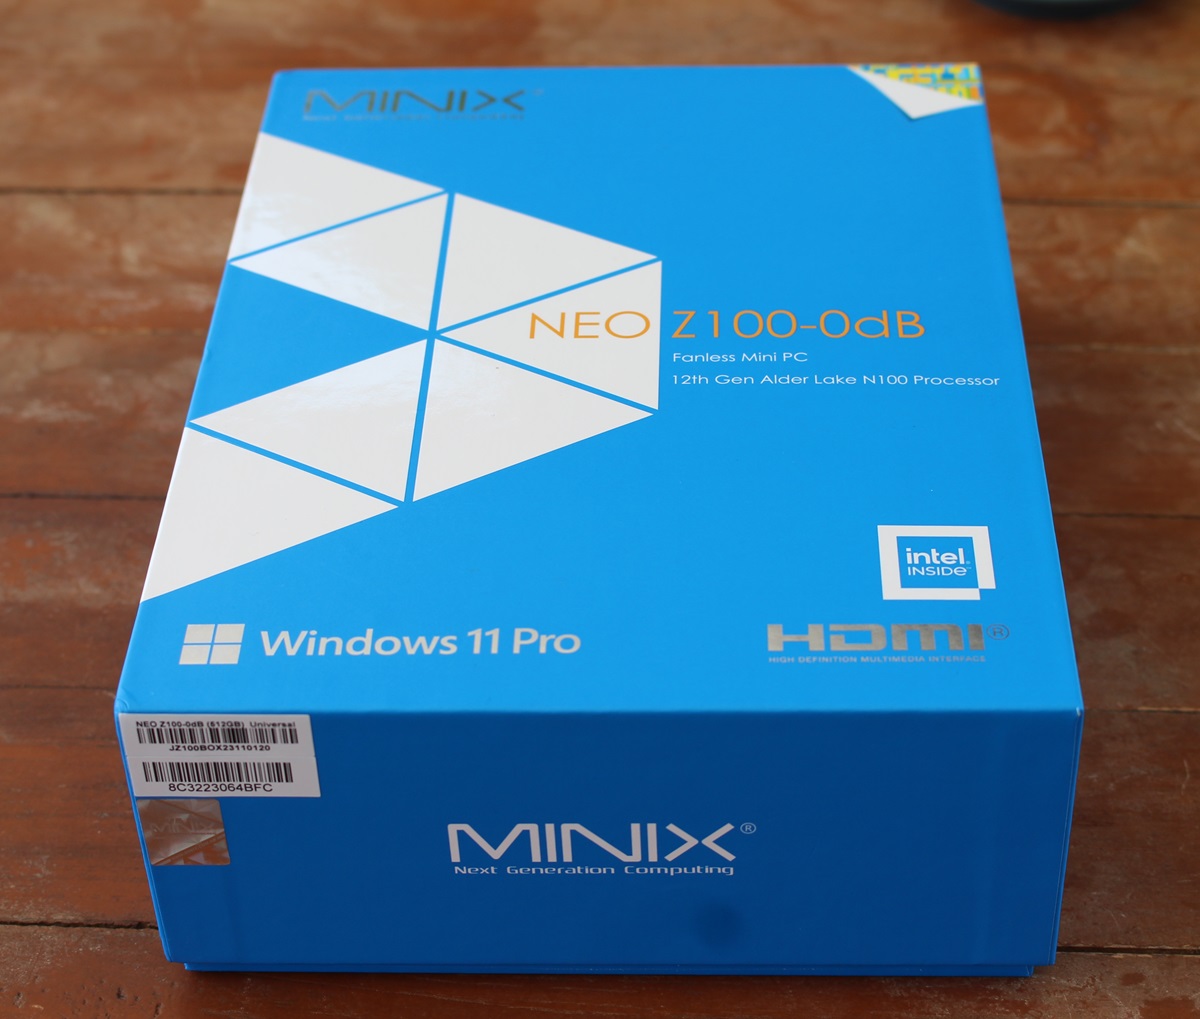 NEO Z100-0dB Windows 11 Pro mini PC